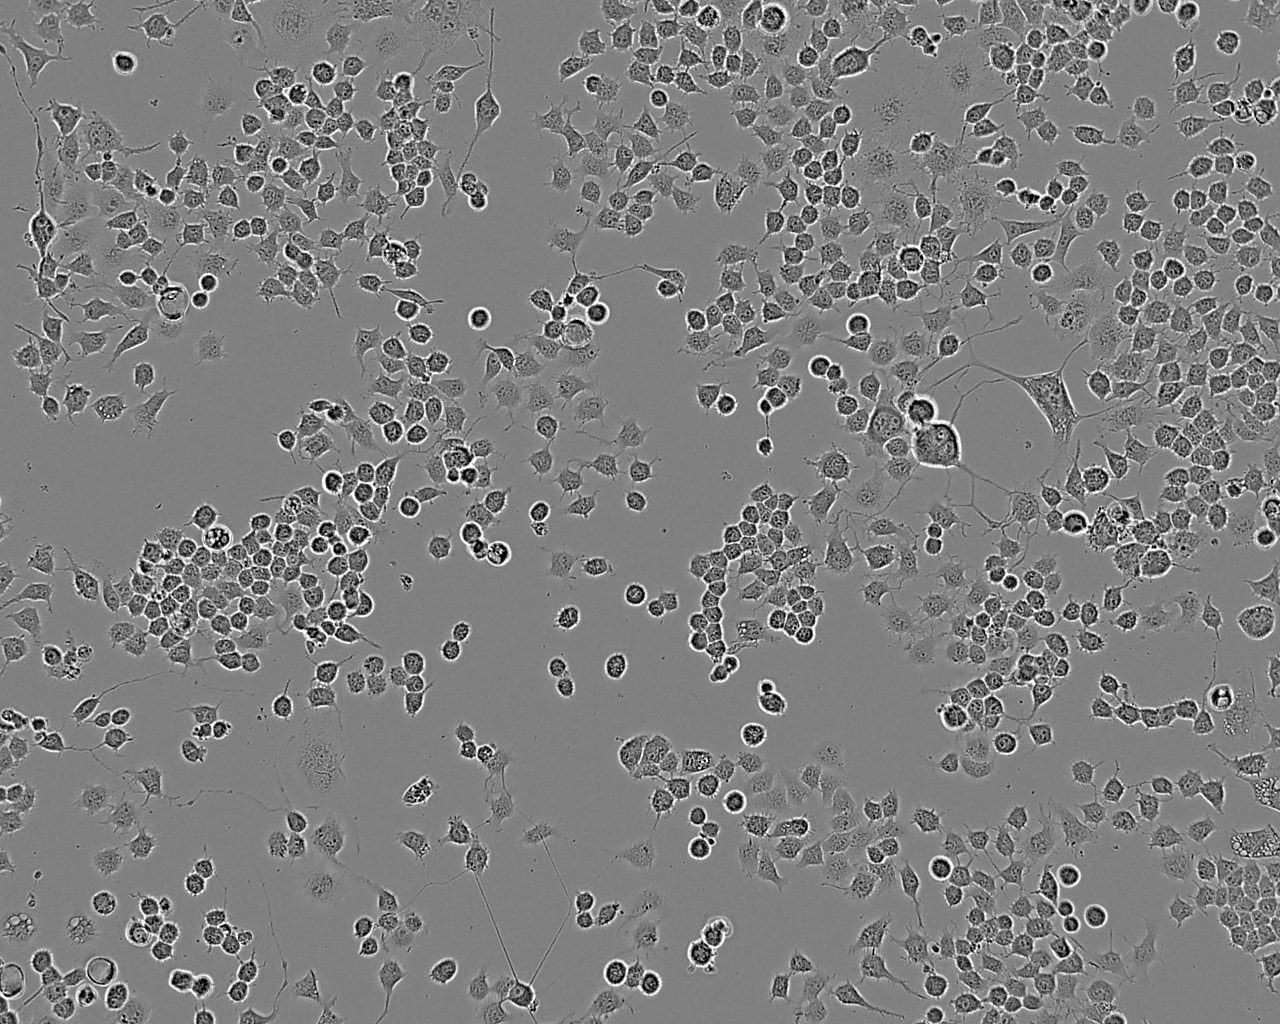 BA/F3 Cells|小鼠原B细胞系